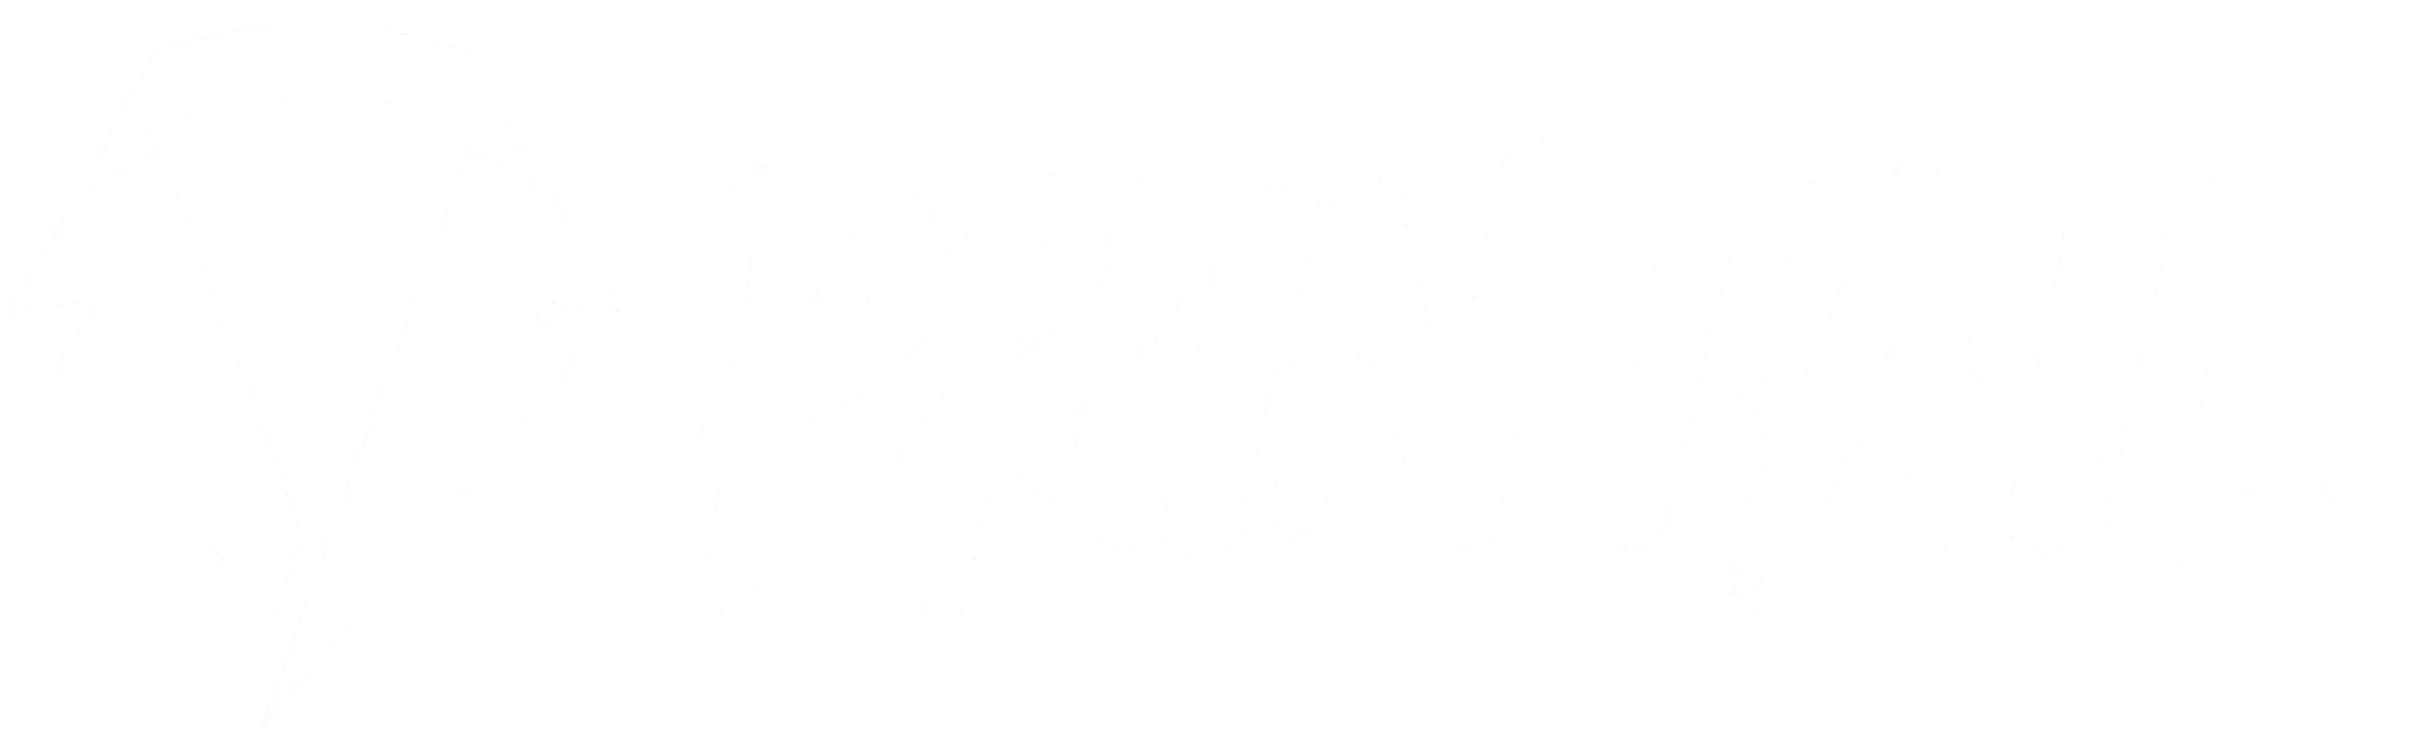 Printail